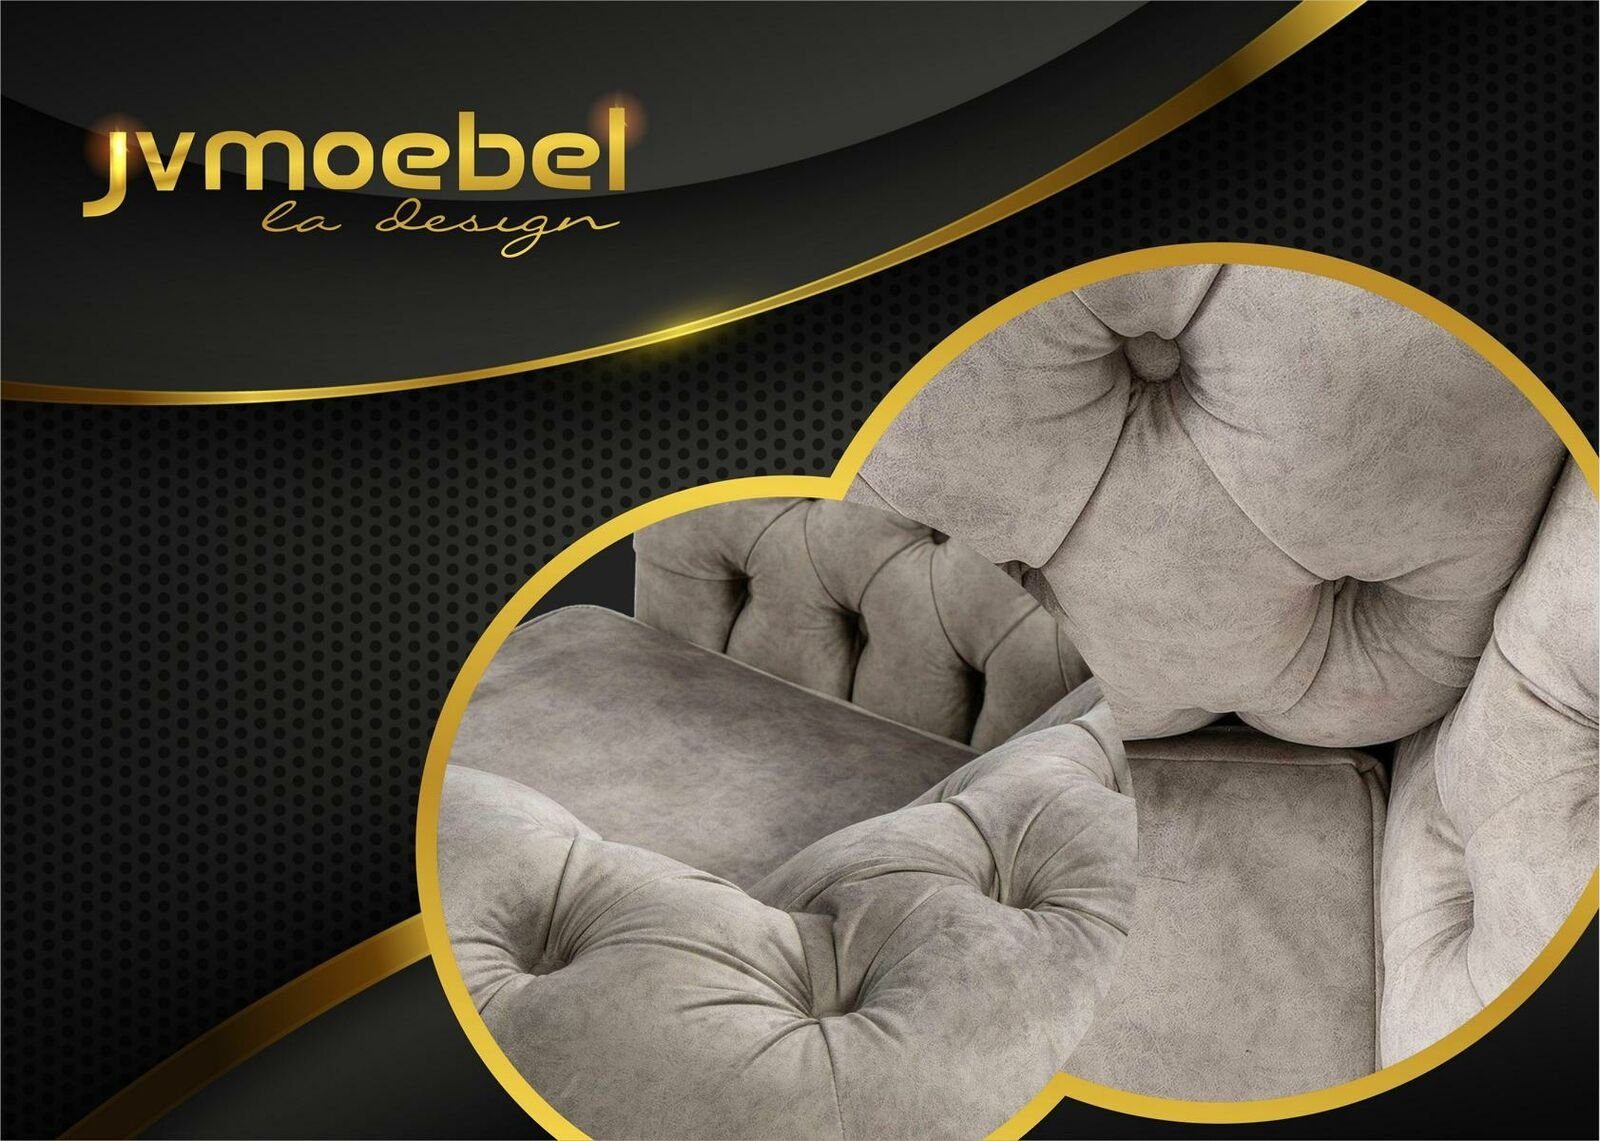 Made Couch Europe Ecksofa Neu, in L-Form Ecksofa Sofa Chesterfield Beige Luxus Modernes JVmoebel